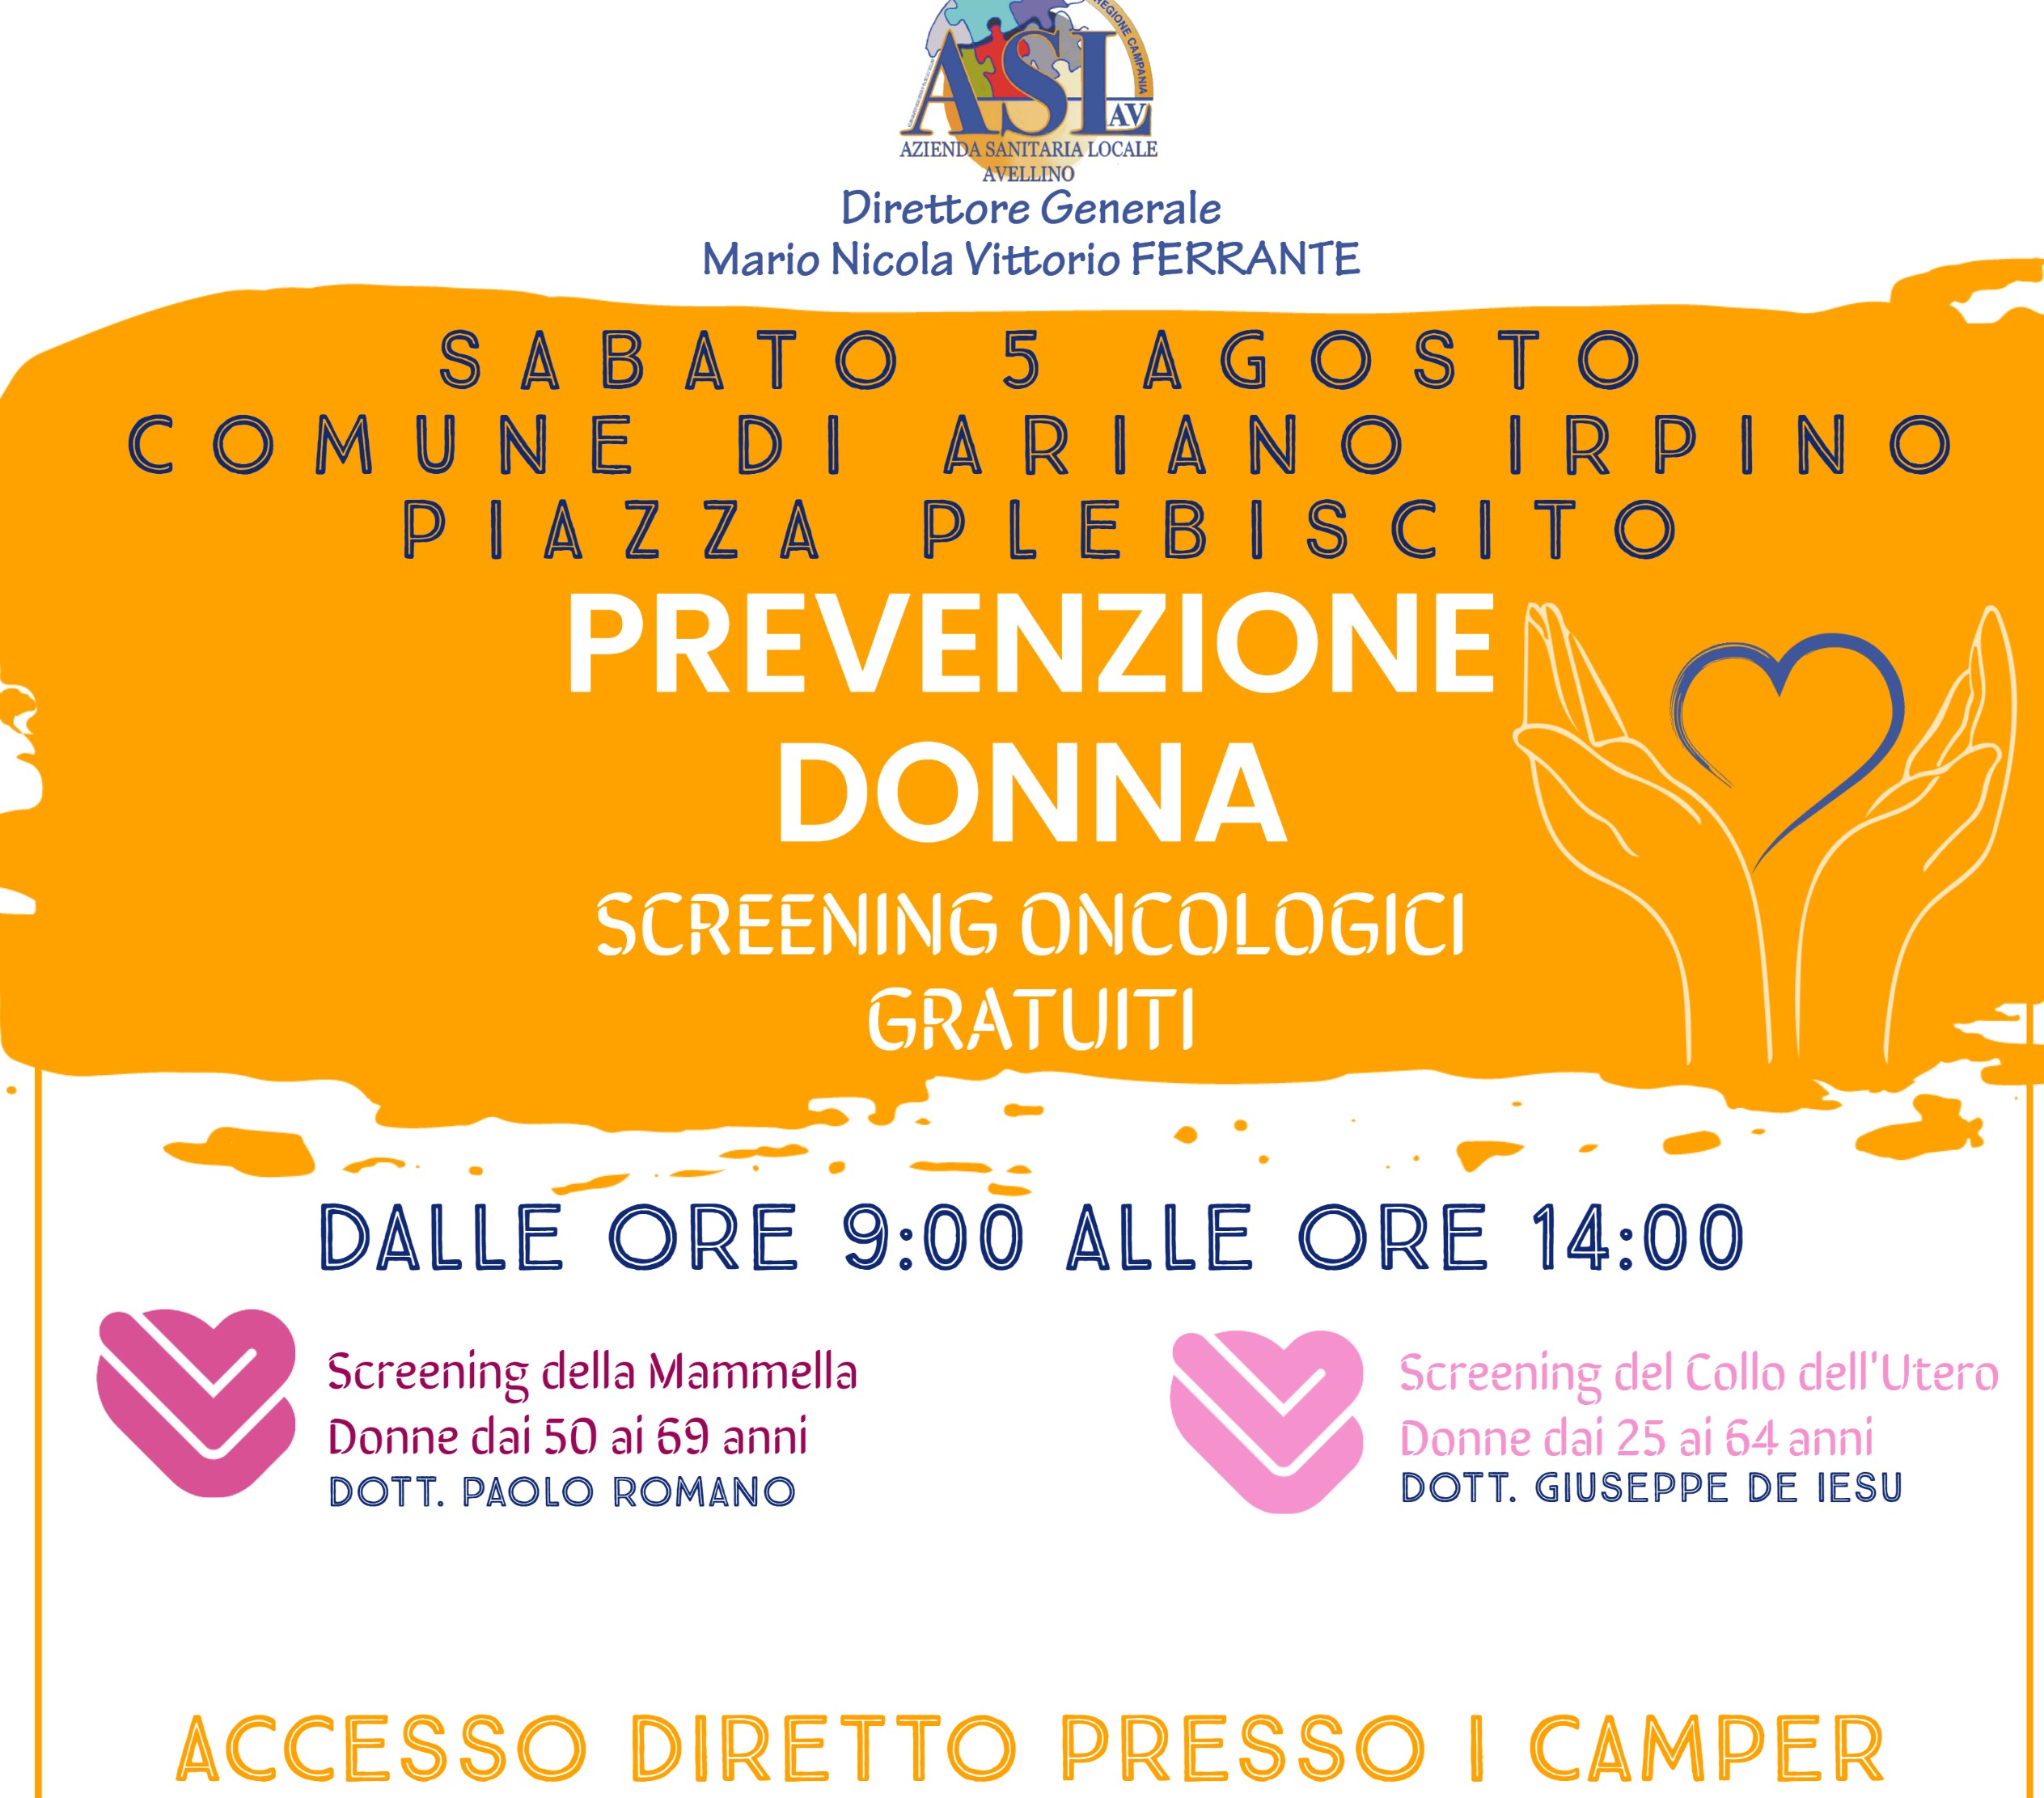 Screening oncologici, i camper dell’Asl sabato ad Ariano Irpino